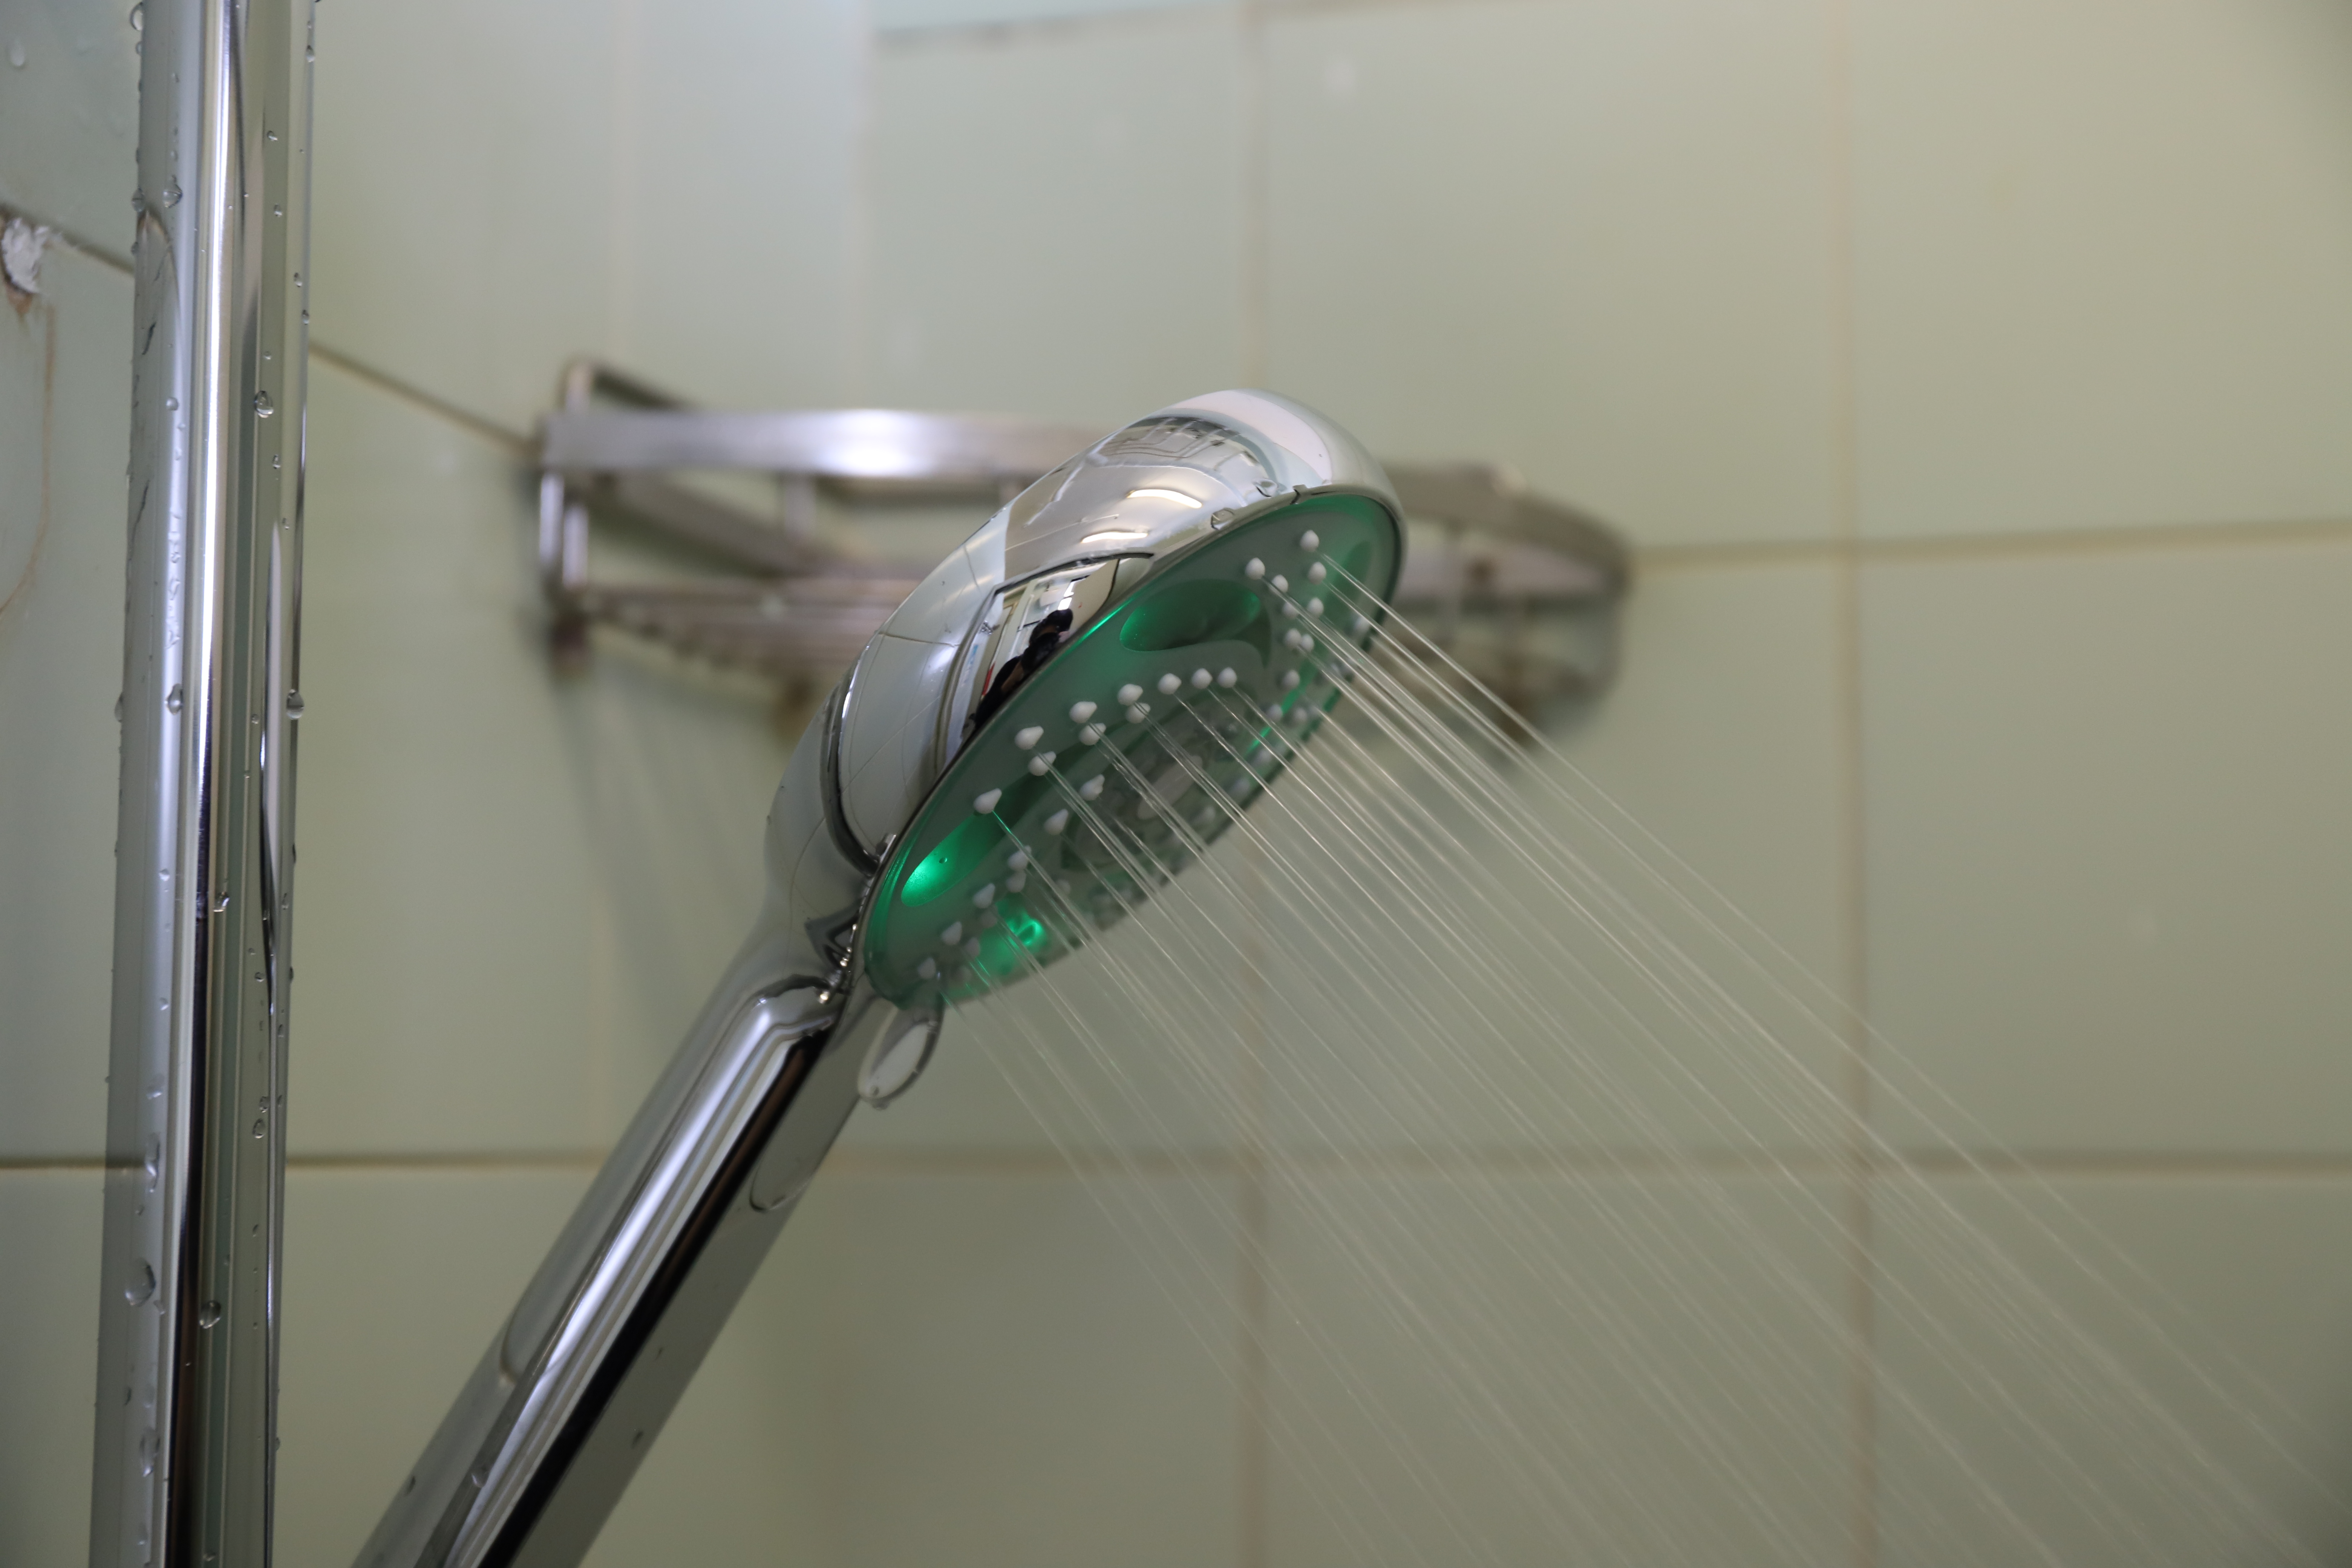 Water-efficient design of the smart showerhead